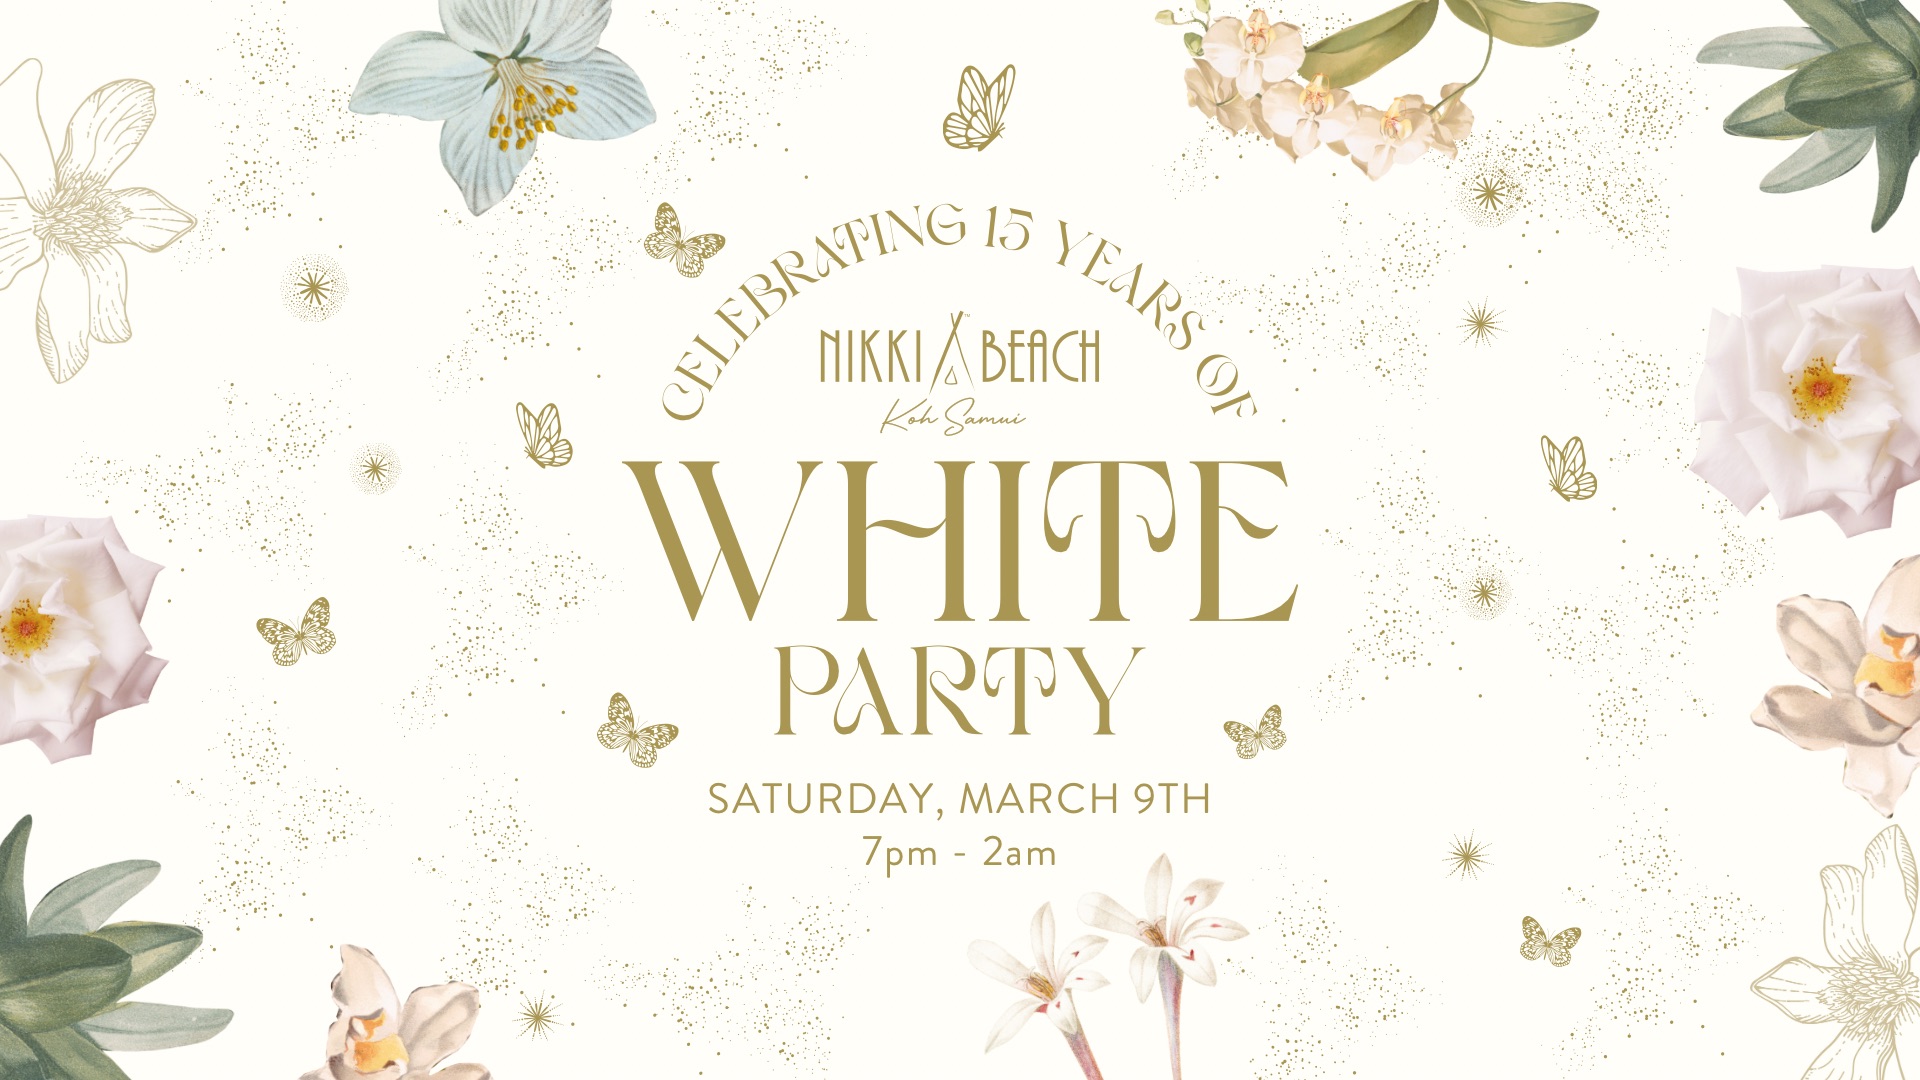 White Party - Nikki Beach Koh Samuin 15-vuotisjuhla